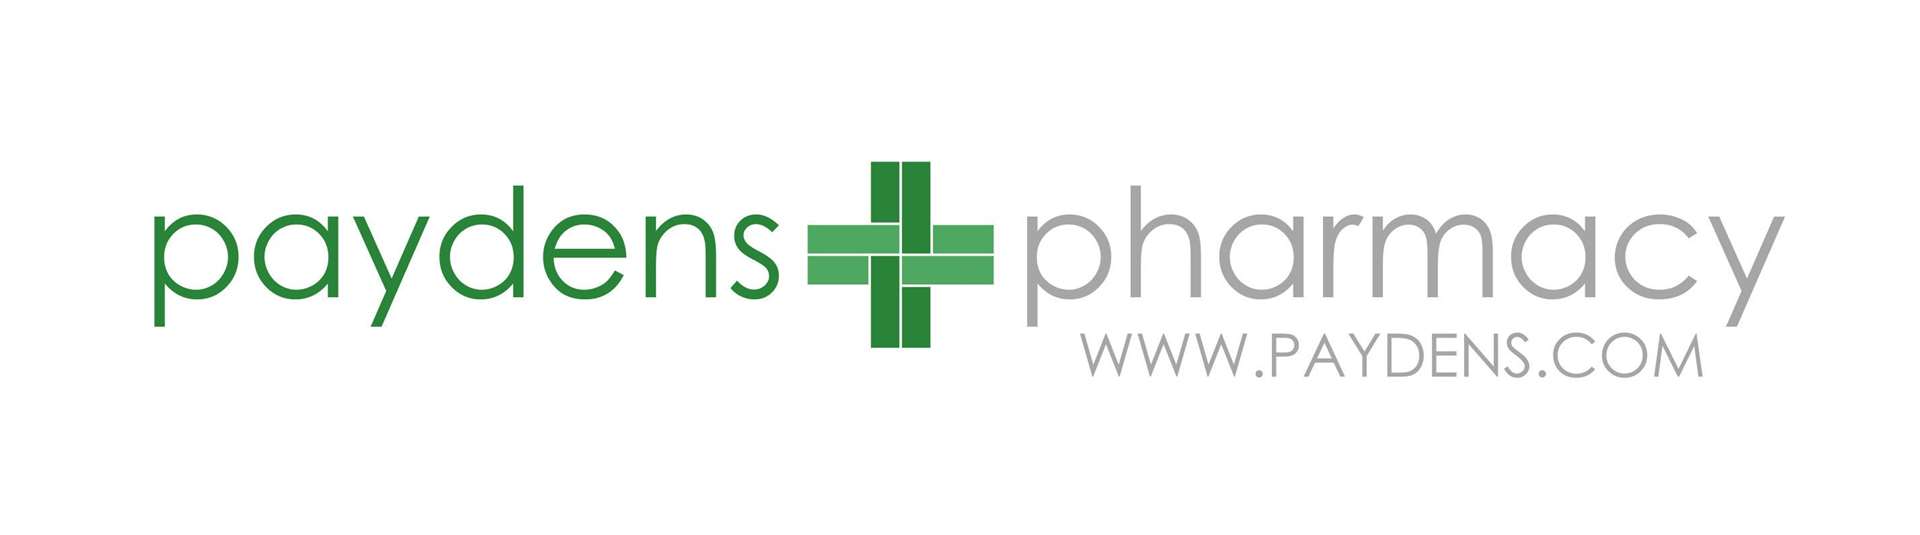 Paydens Pharmacy logo